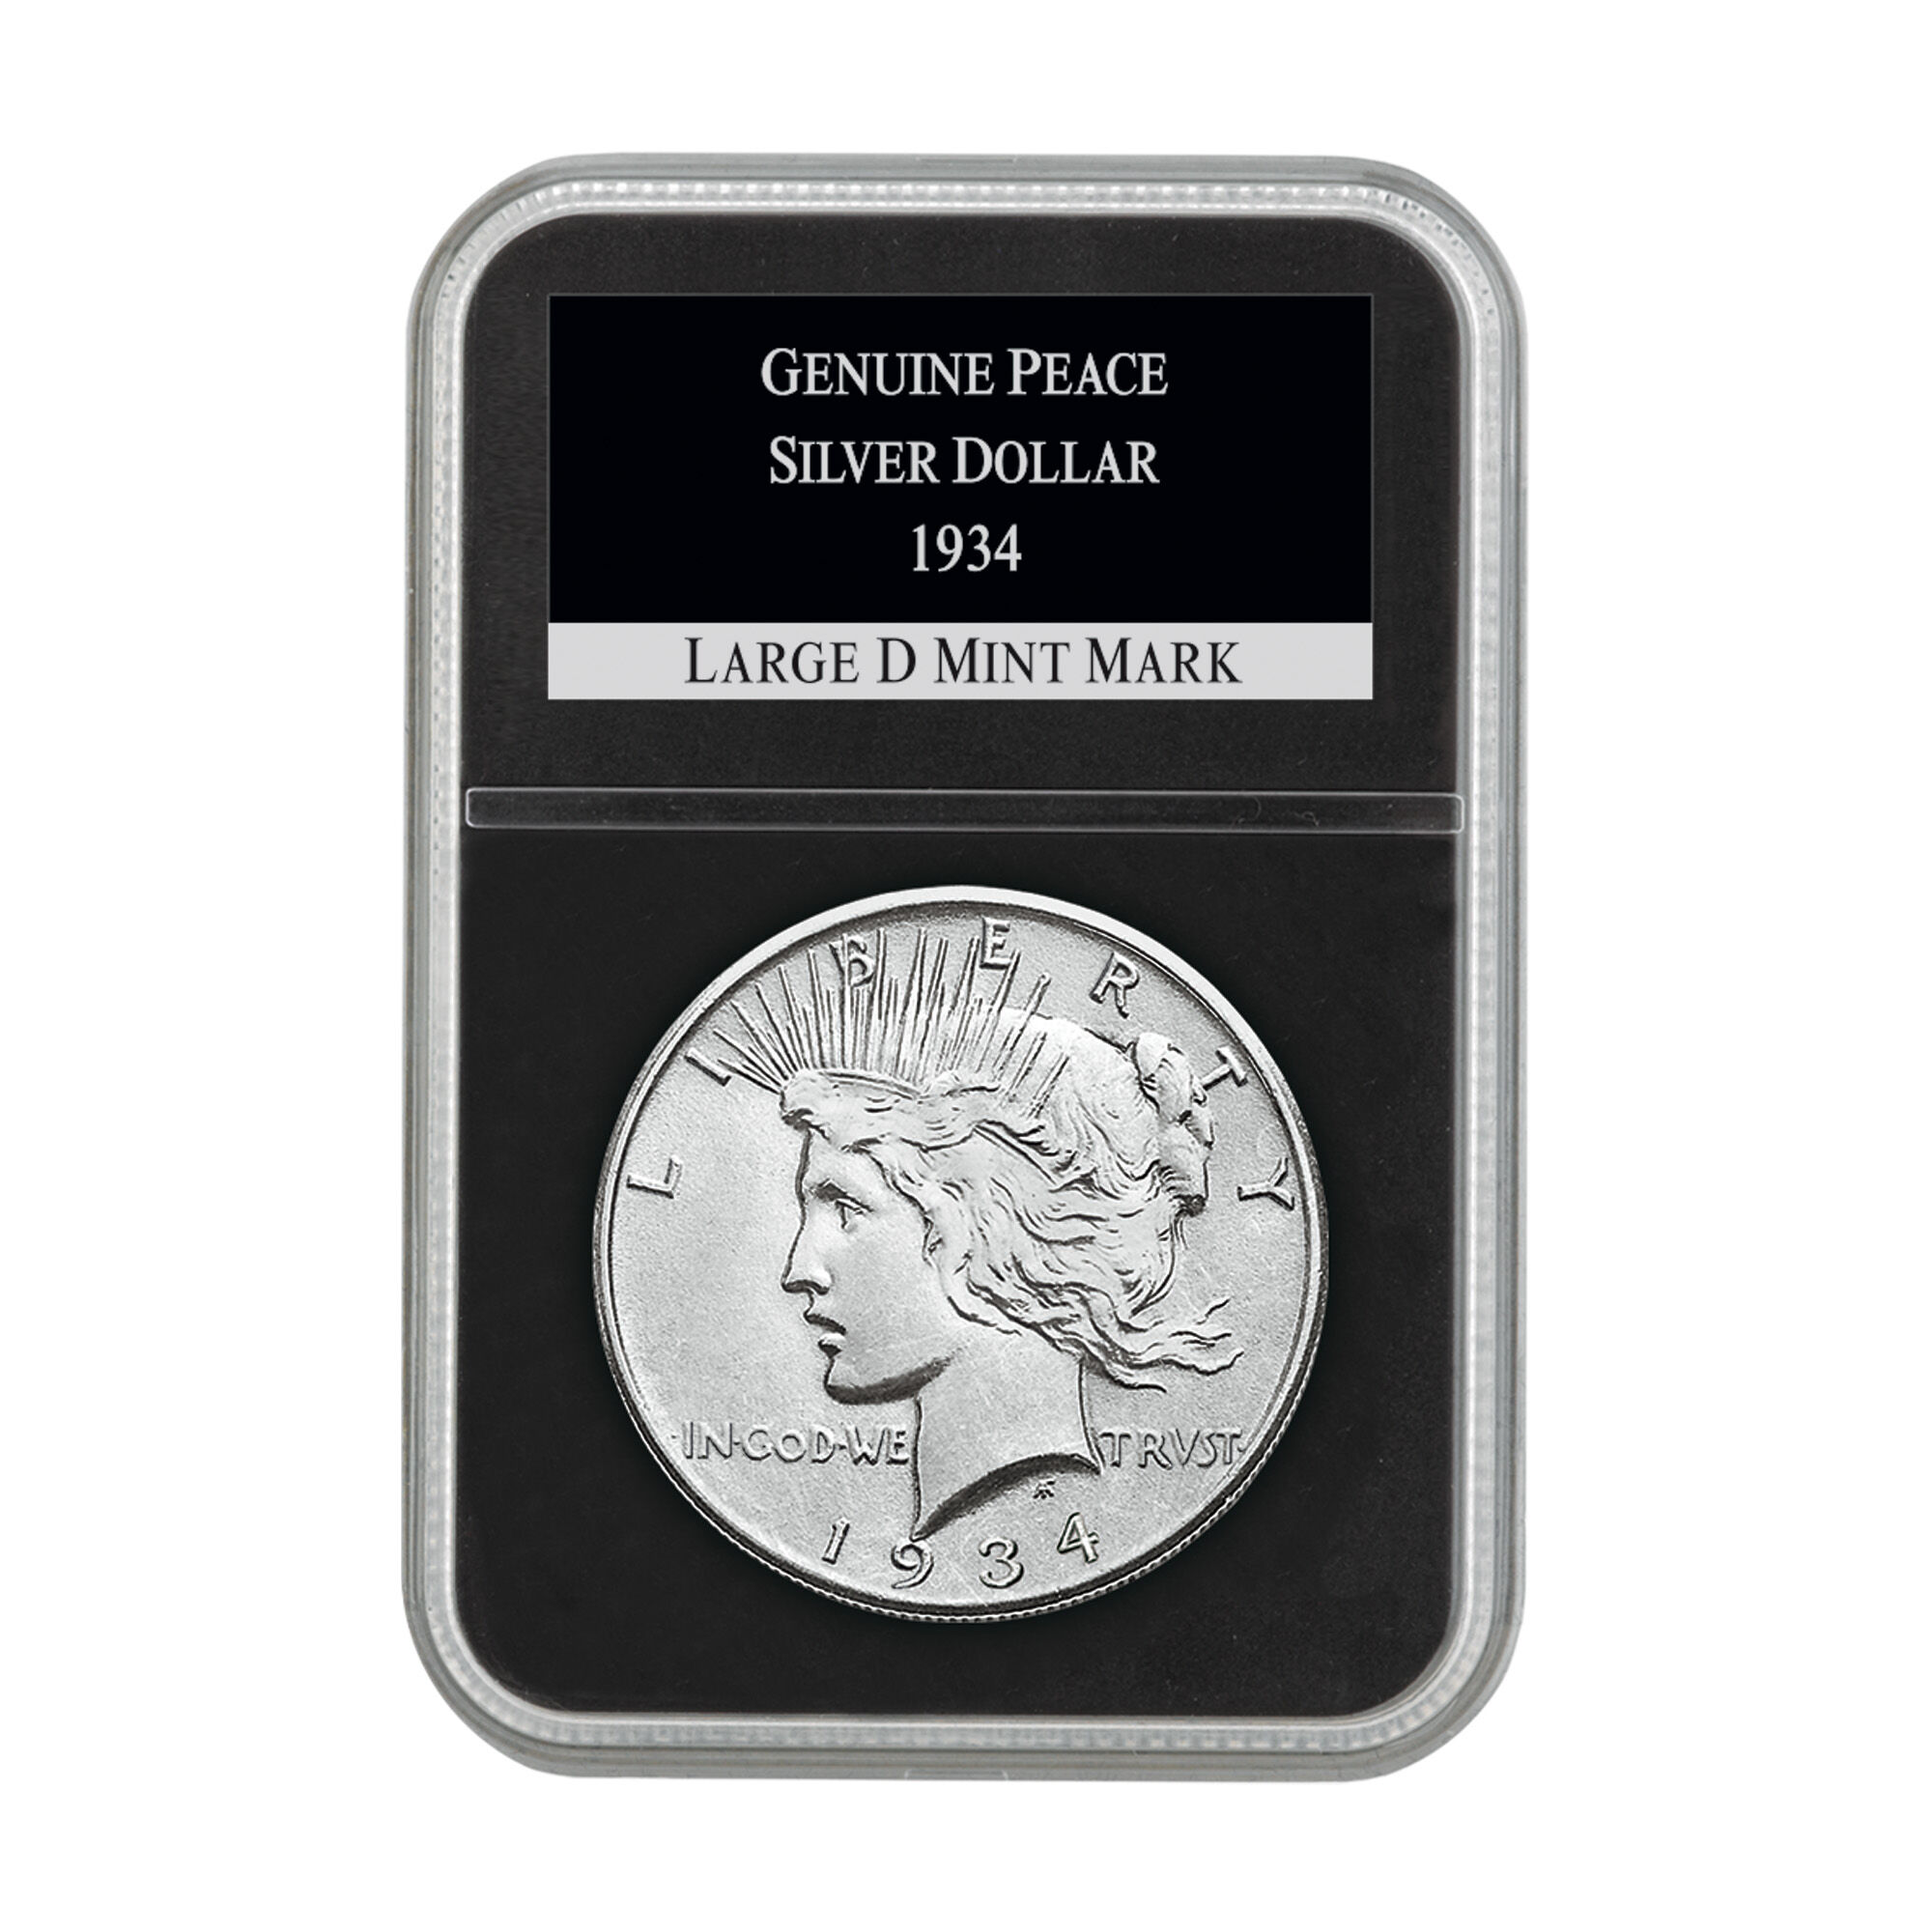 denver mint peace silver dollar mint mark variety set PDV c Case